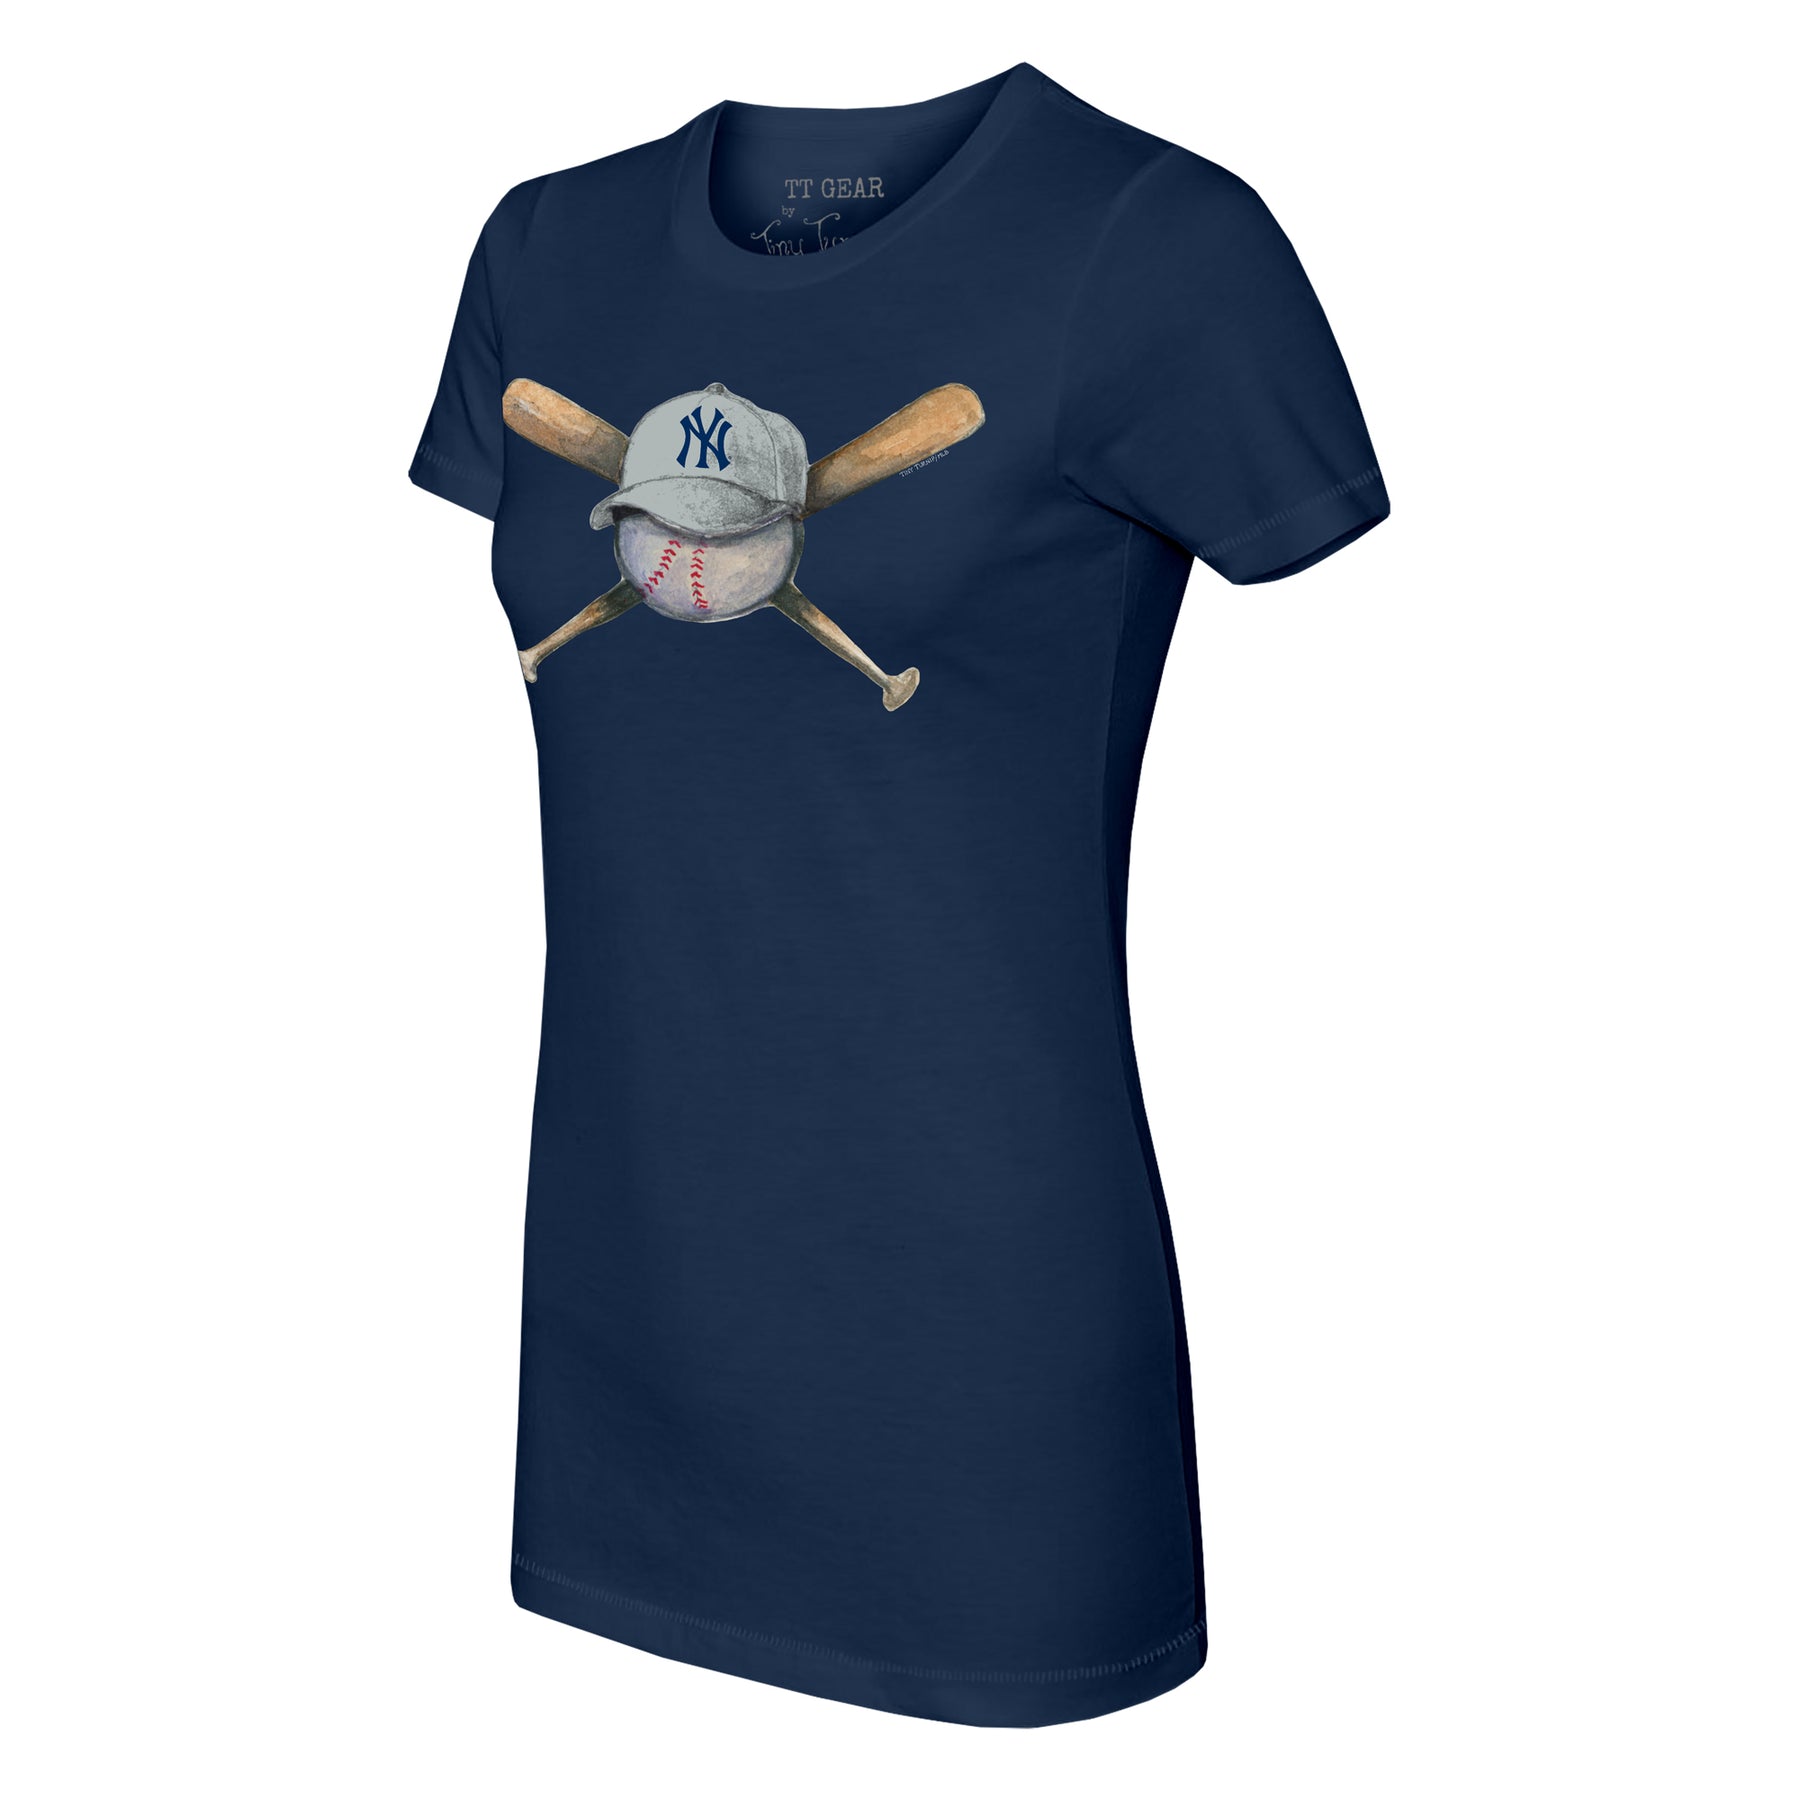 Women's Tiny Turnip White New York Yankees Hat Crossbats T-Shirt Size: 3XL